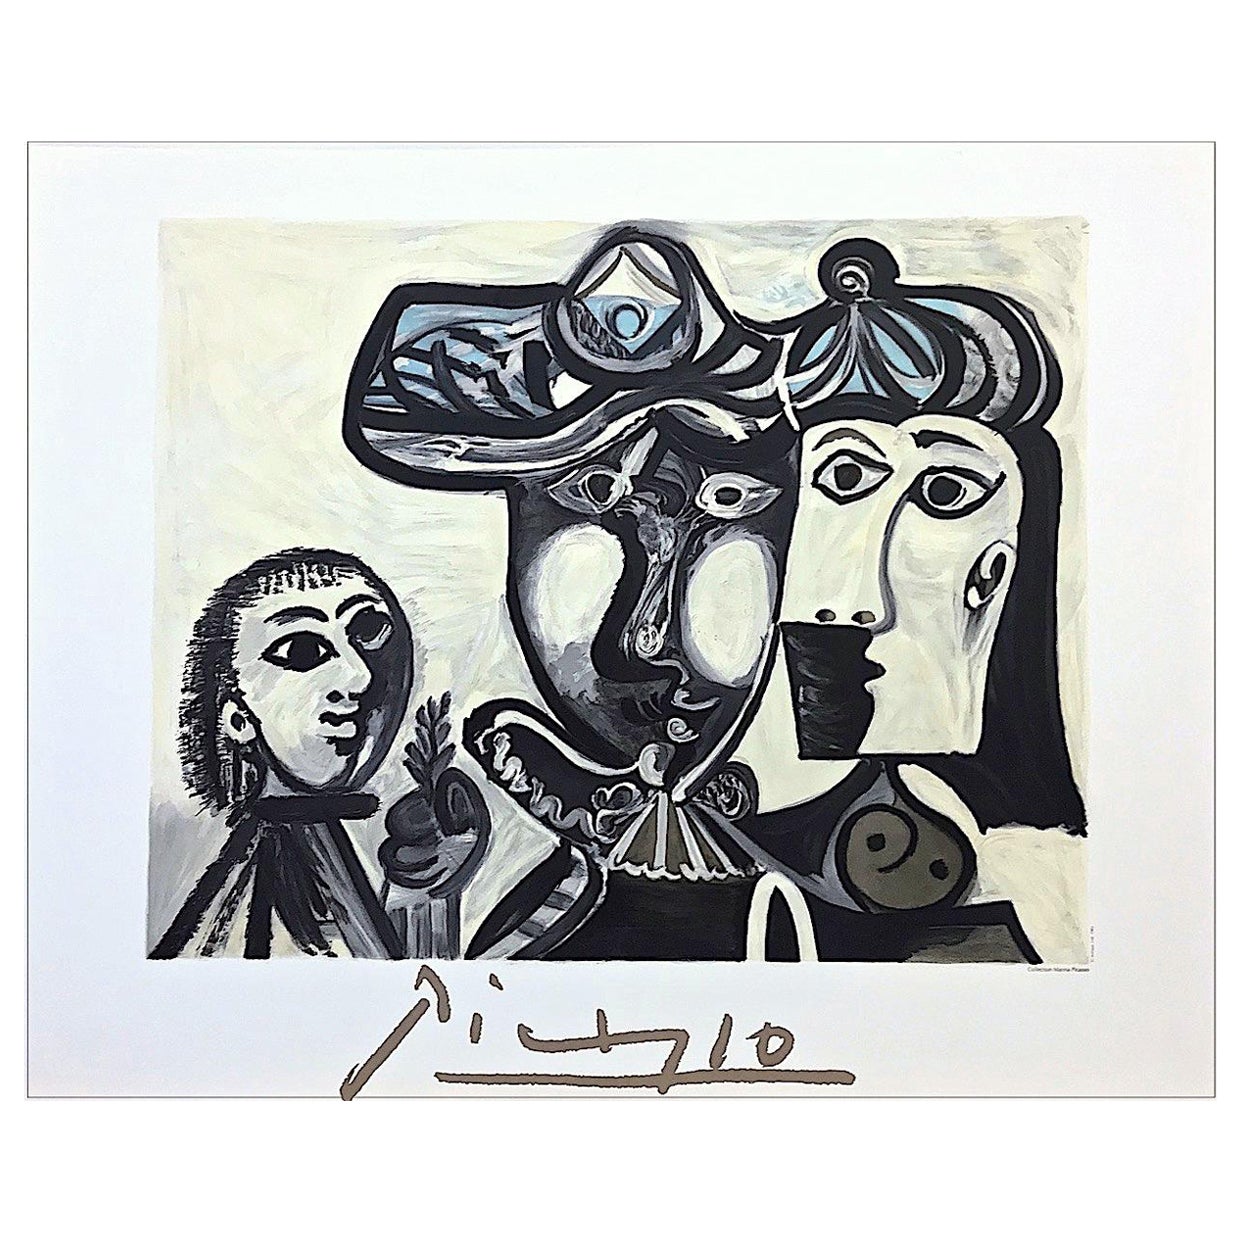 (after) Pablo Picasso Abstract Print - Couple et Enfant au Rameau d’Olivier, Lithograph, Abstract Family Portrait, Hats